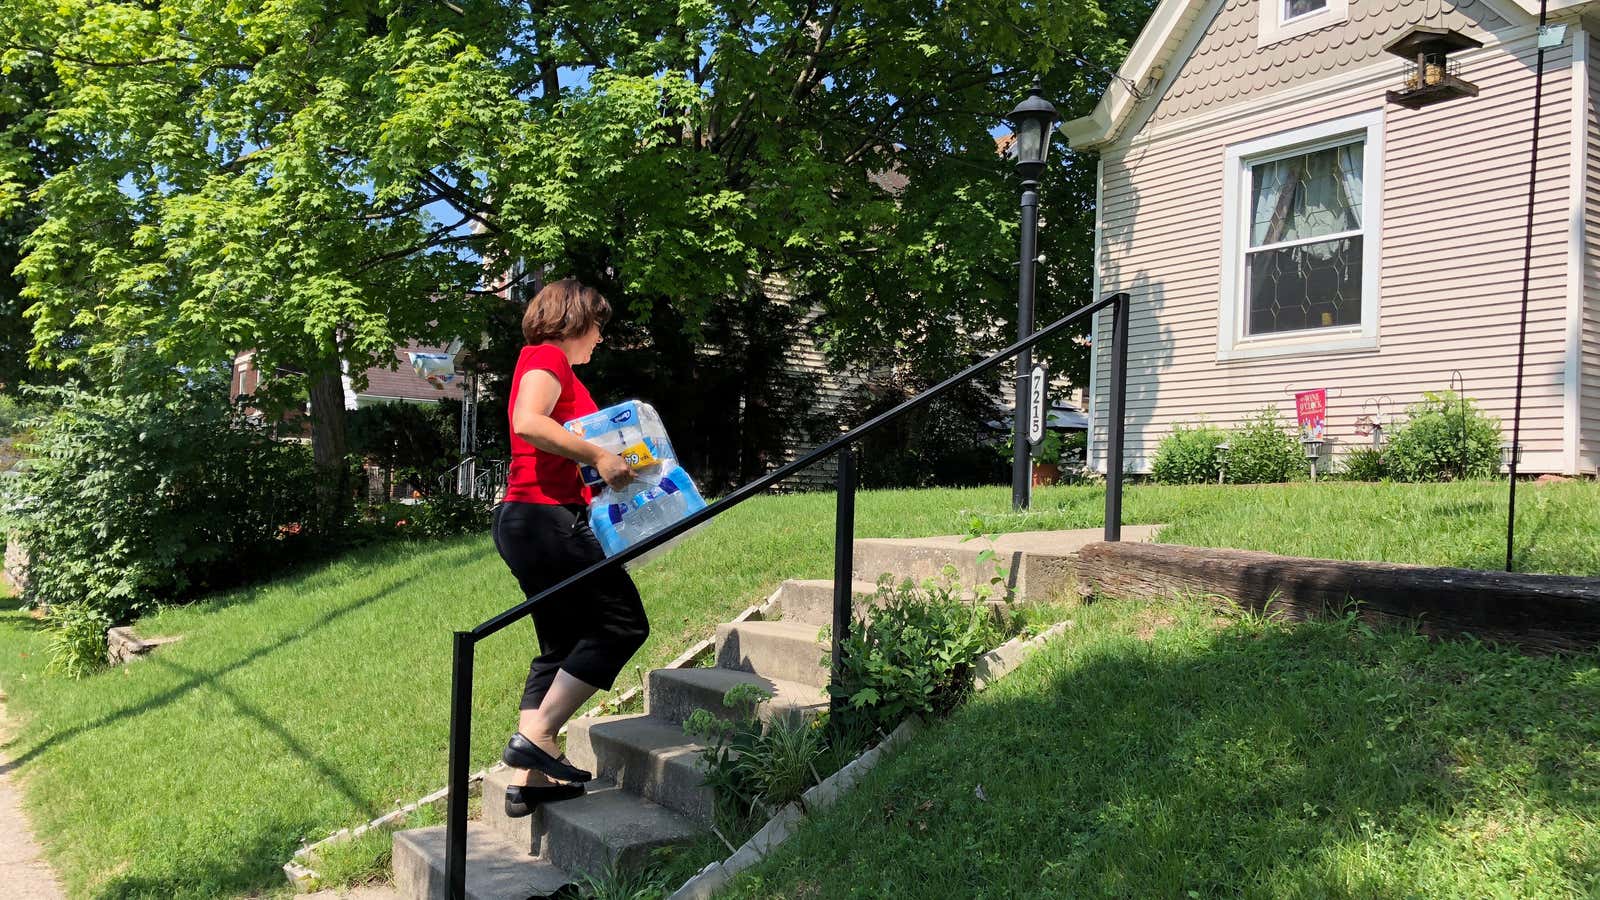 Cincinnati DoorDash worker Renee Shell delivers an order from Walmart in Cincinnati, Ohio, U.S., July 1, 2018.